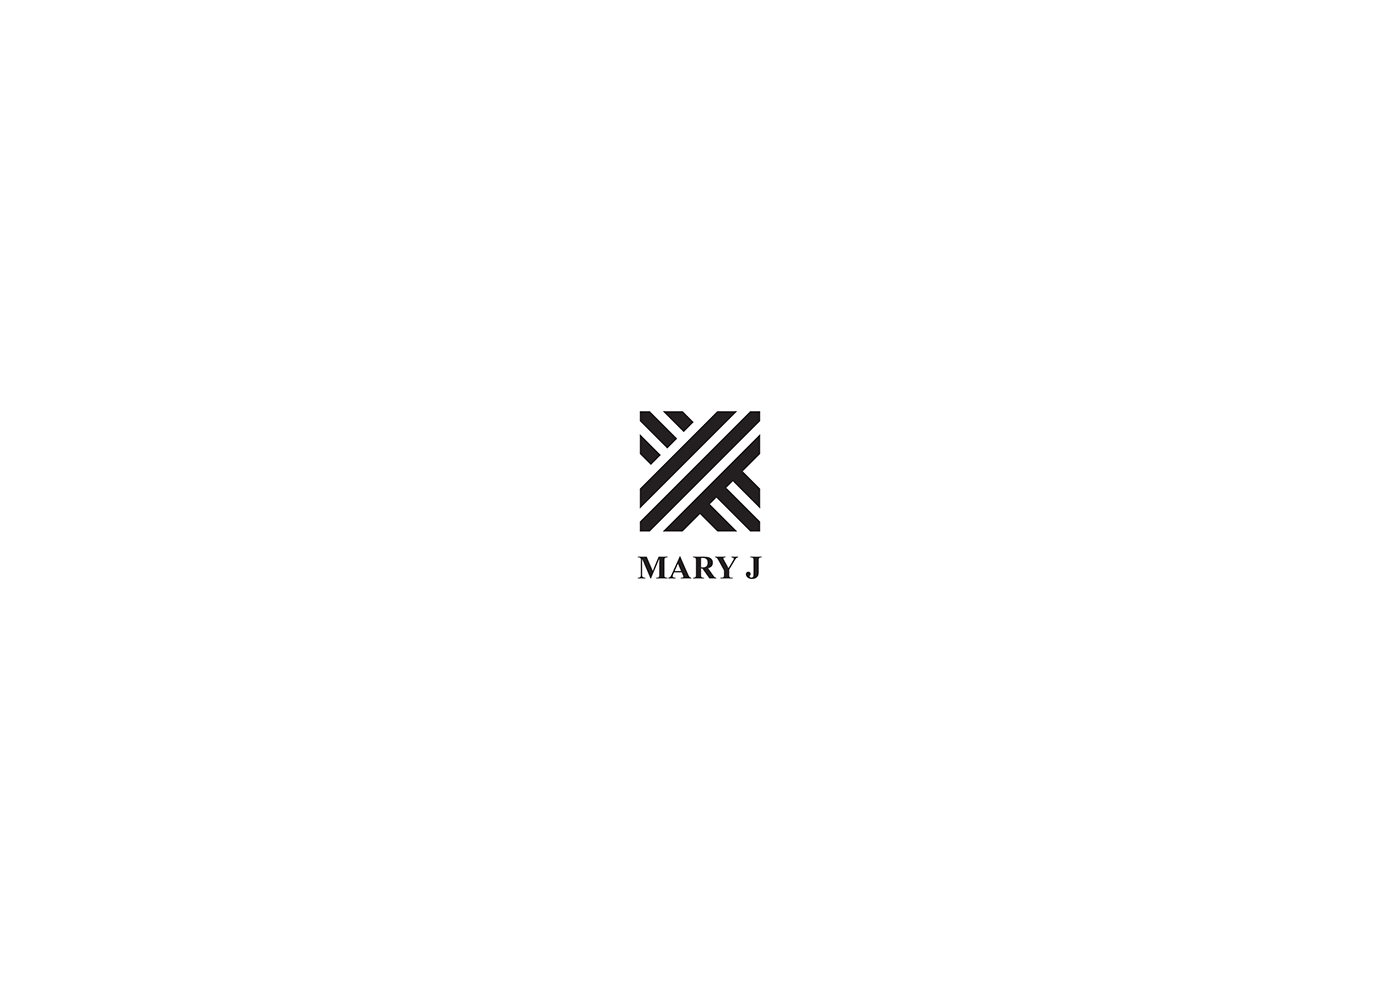 maryj mary j company company mary j card business card business monotone grey Tooling press bx brand symbol logo